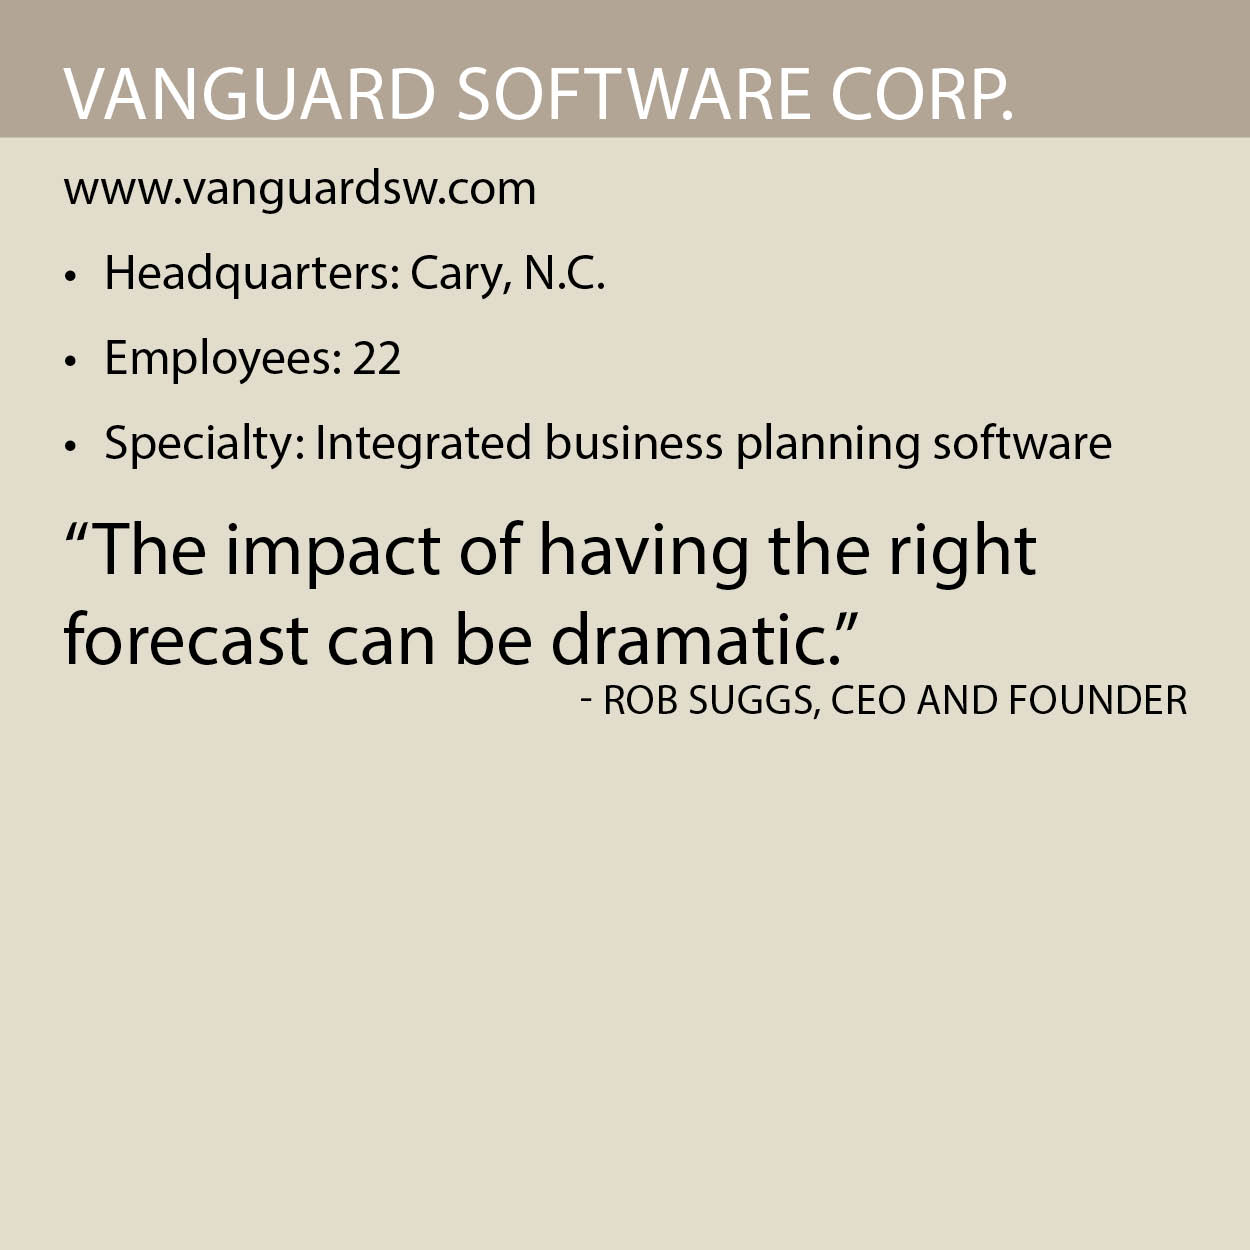 Vanguard Software Corp. fact box